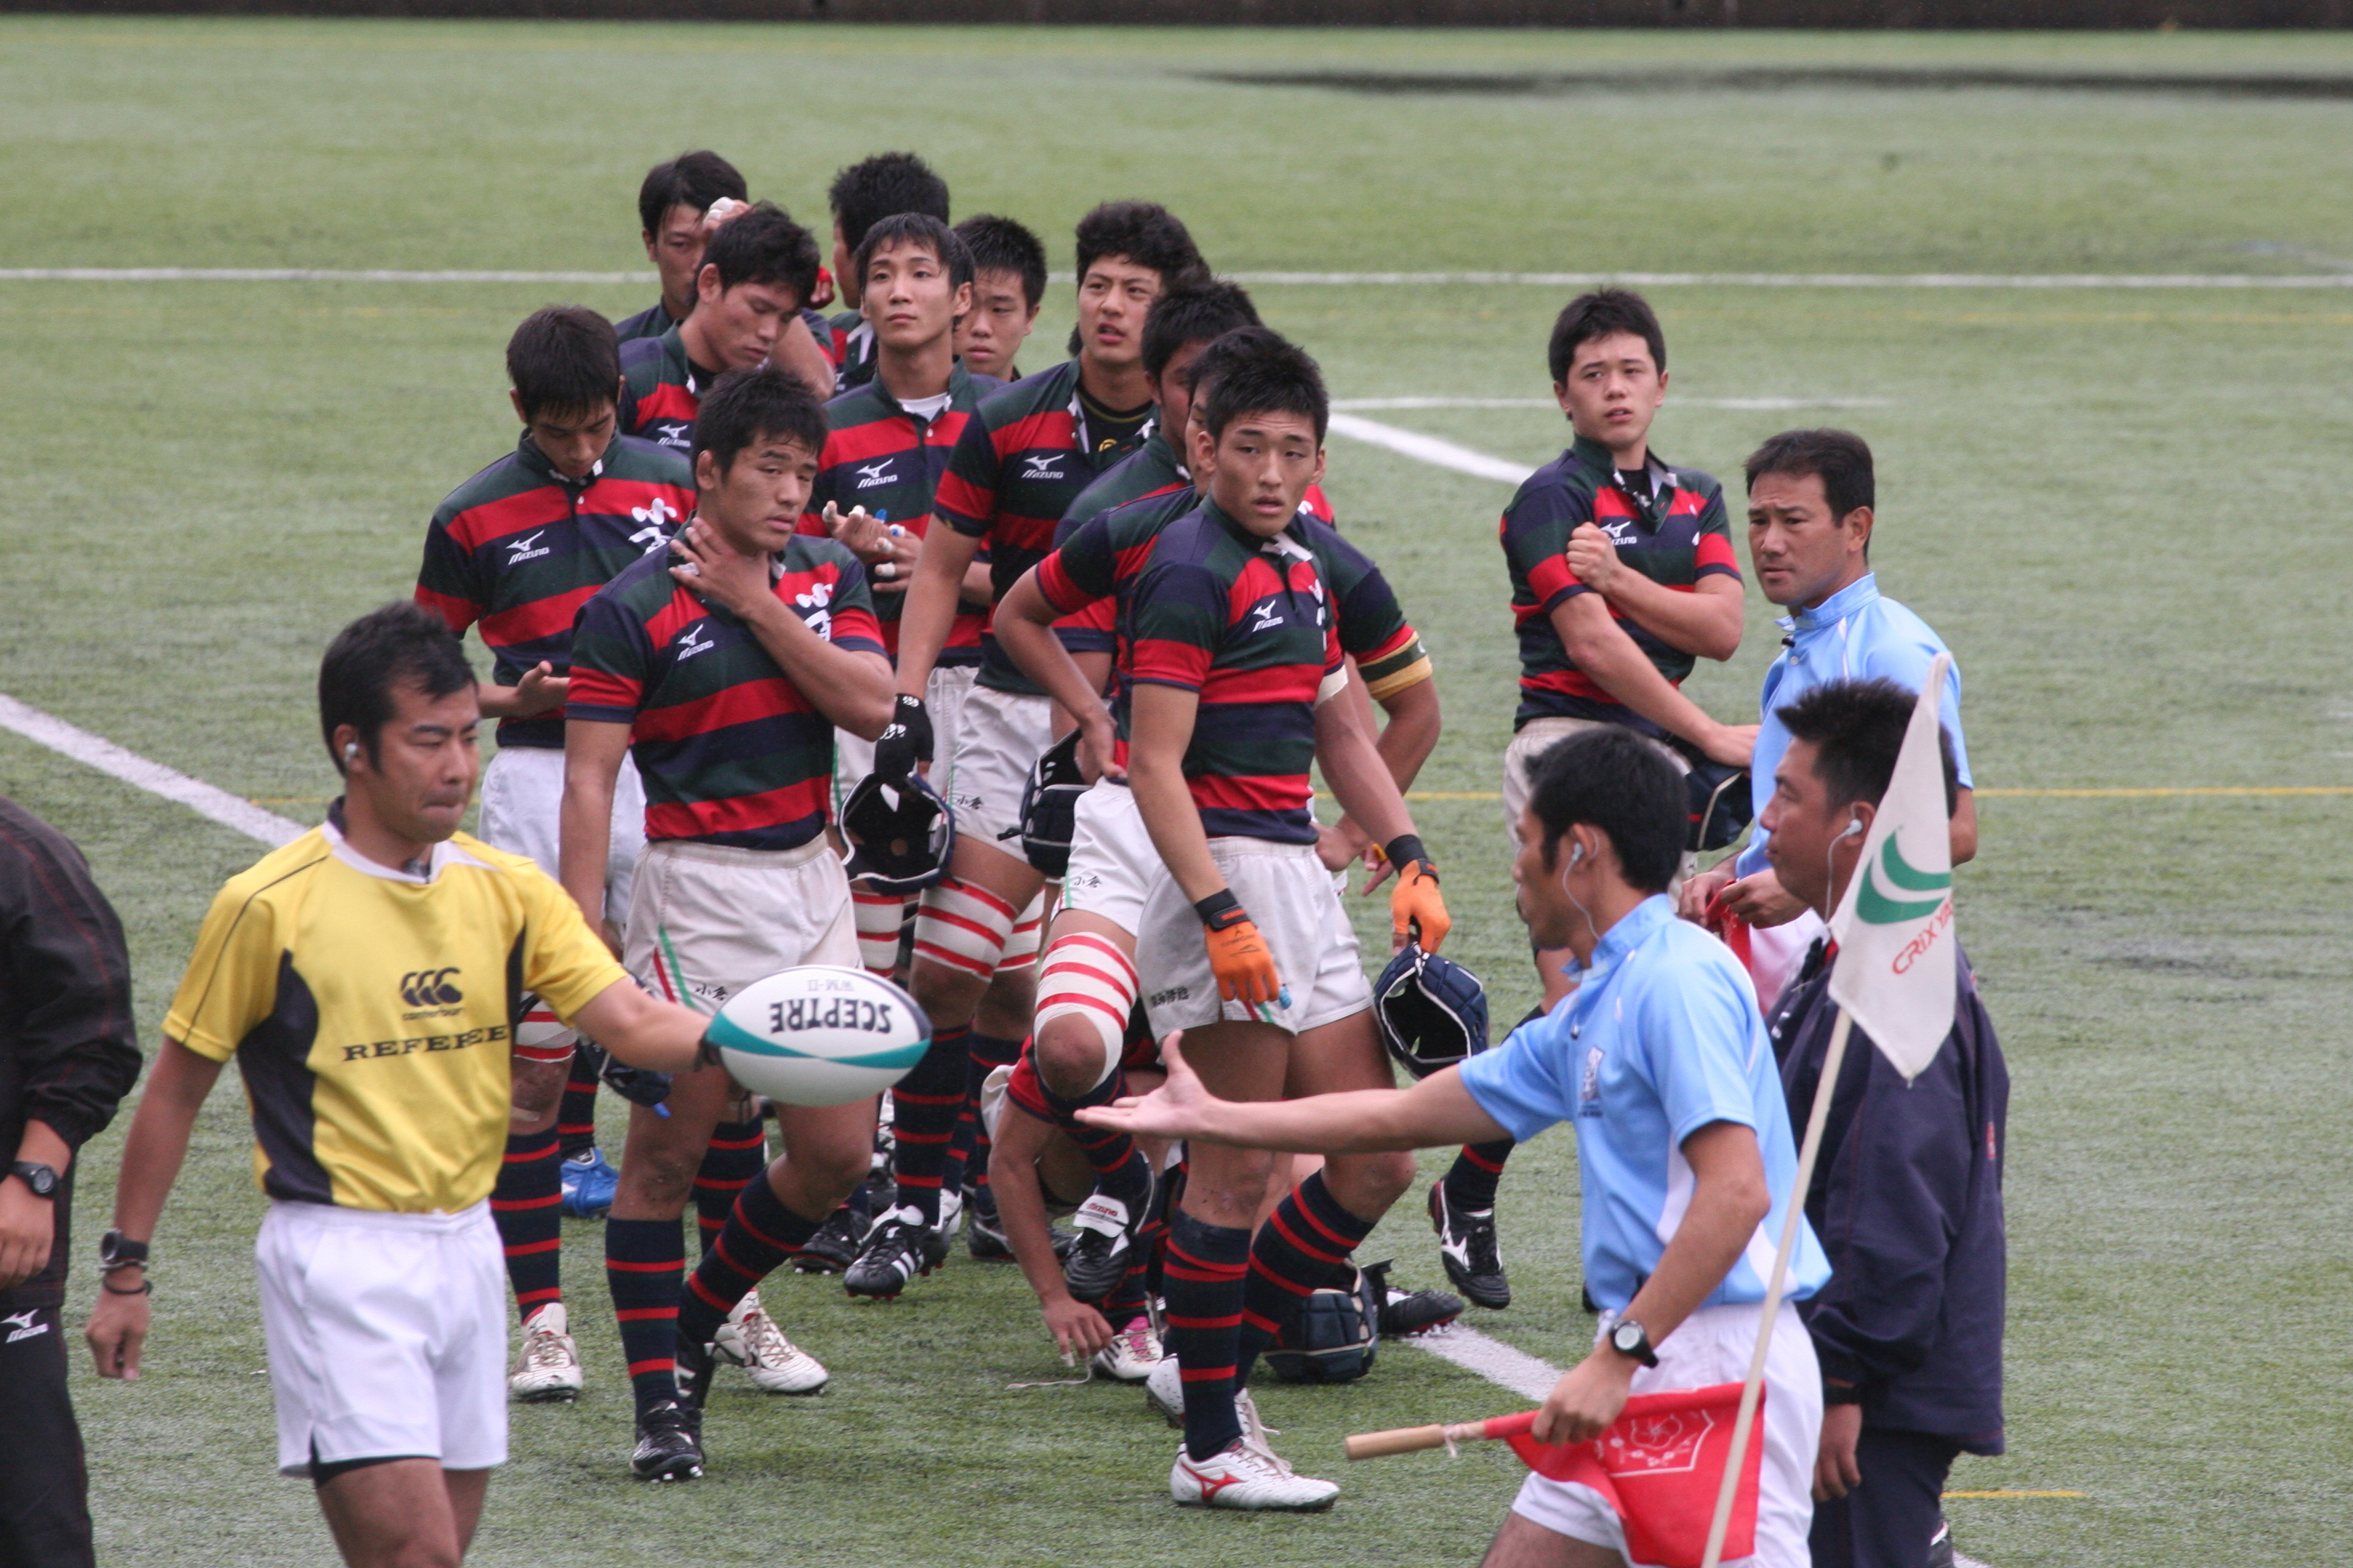 http://kokura-rugby.sakura.ne.jp/2011.11.6-1-12.JPG